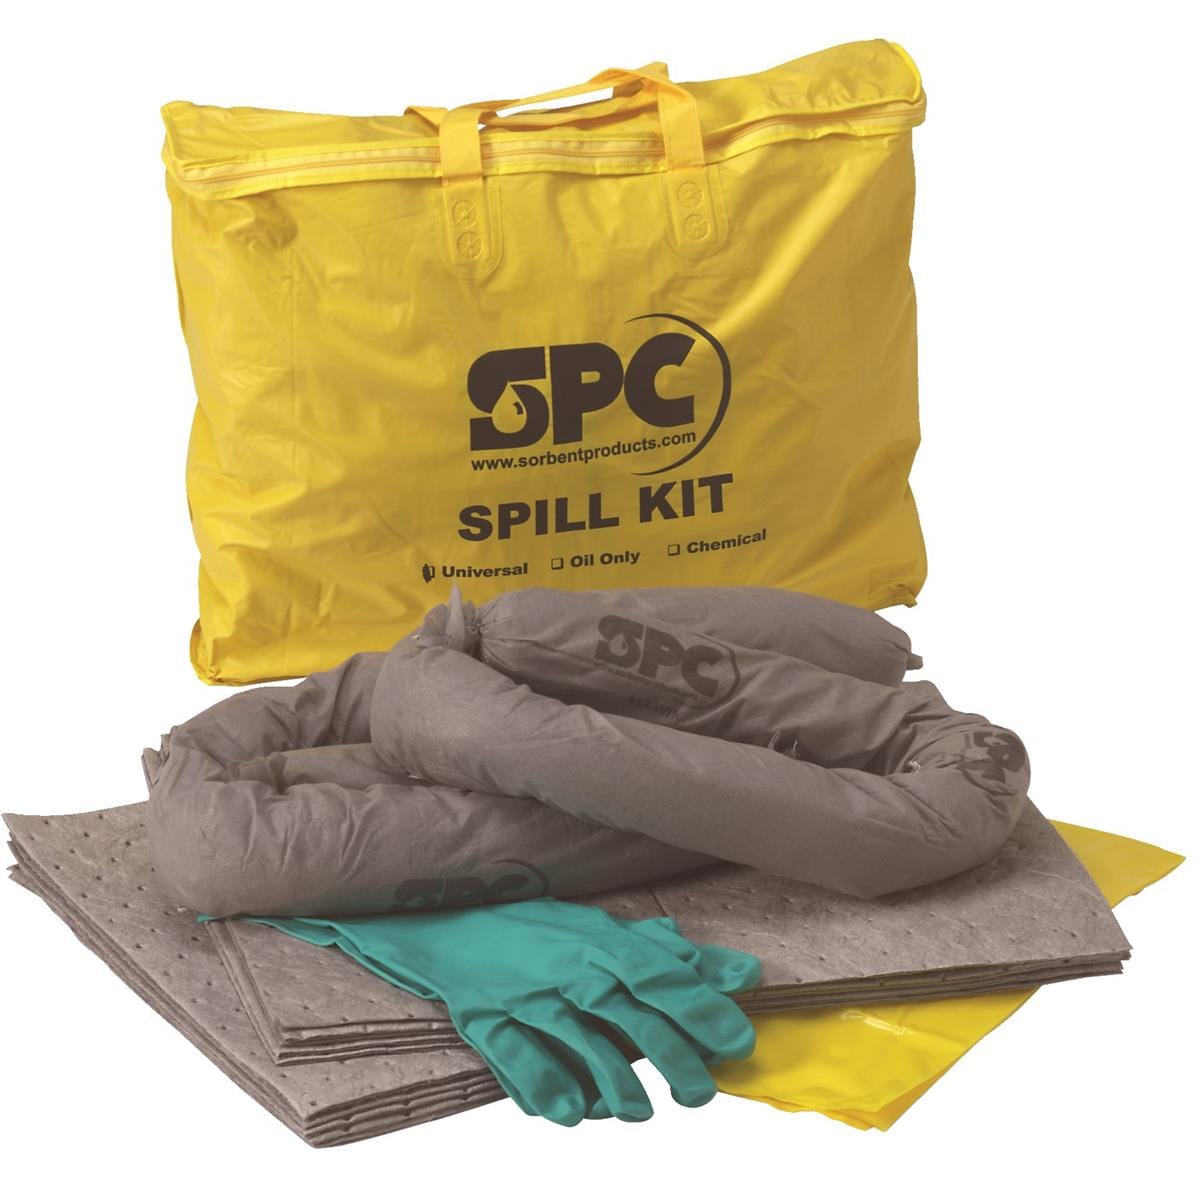 BRADY SPC ABSORBENTS Economy Spill Kit, Universal/Maintenance